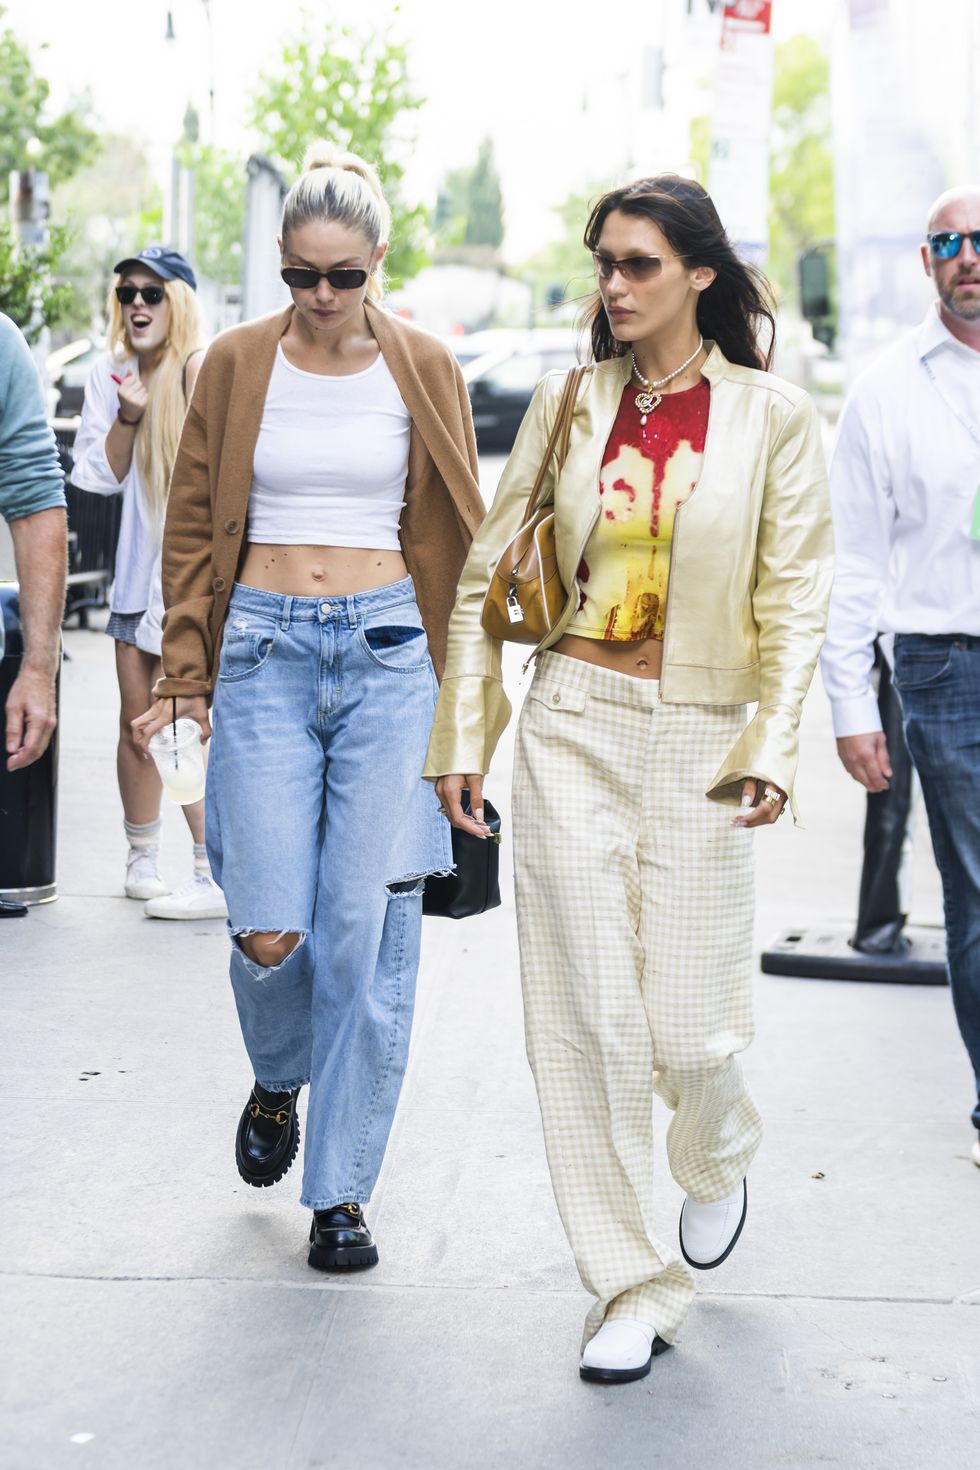 Gigi and Bella Hadid's Stylists on Crafting Their Street Style – WWD